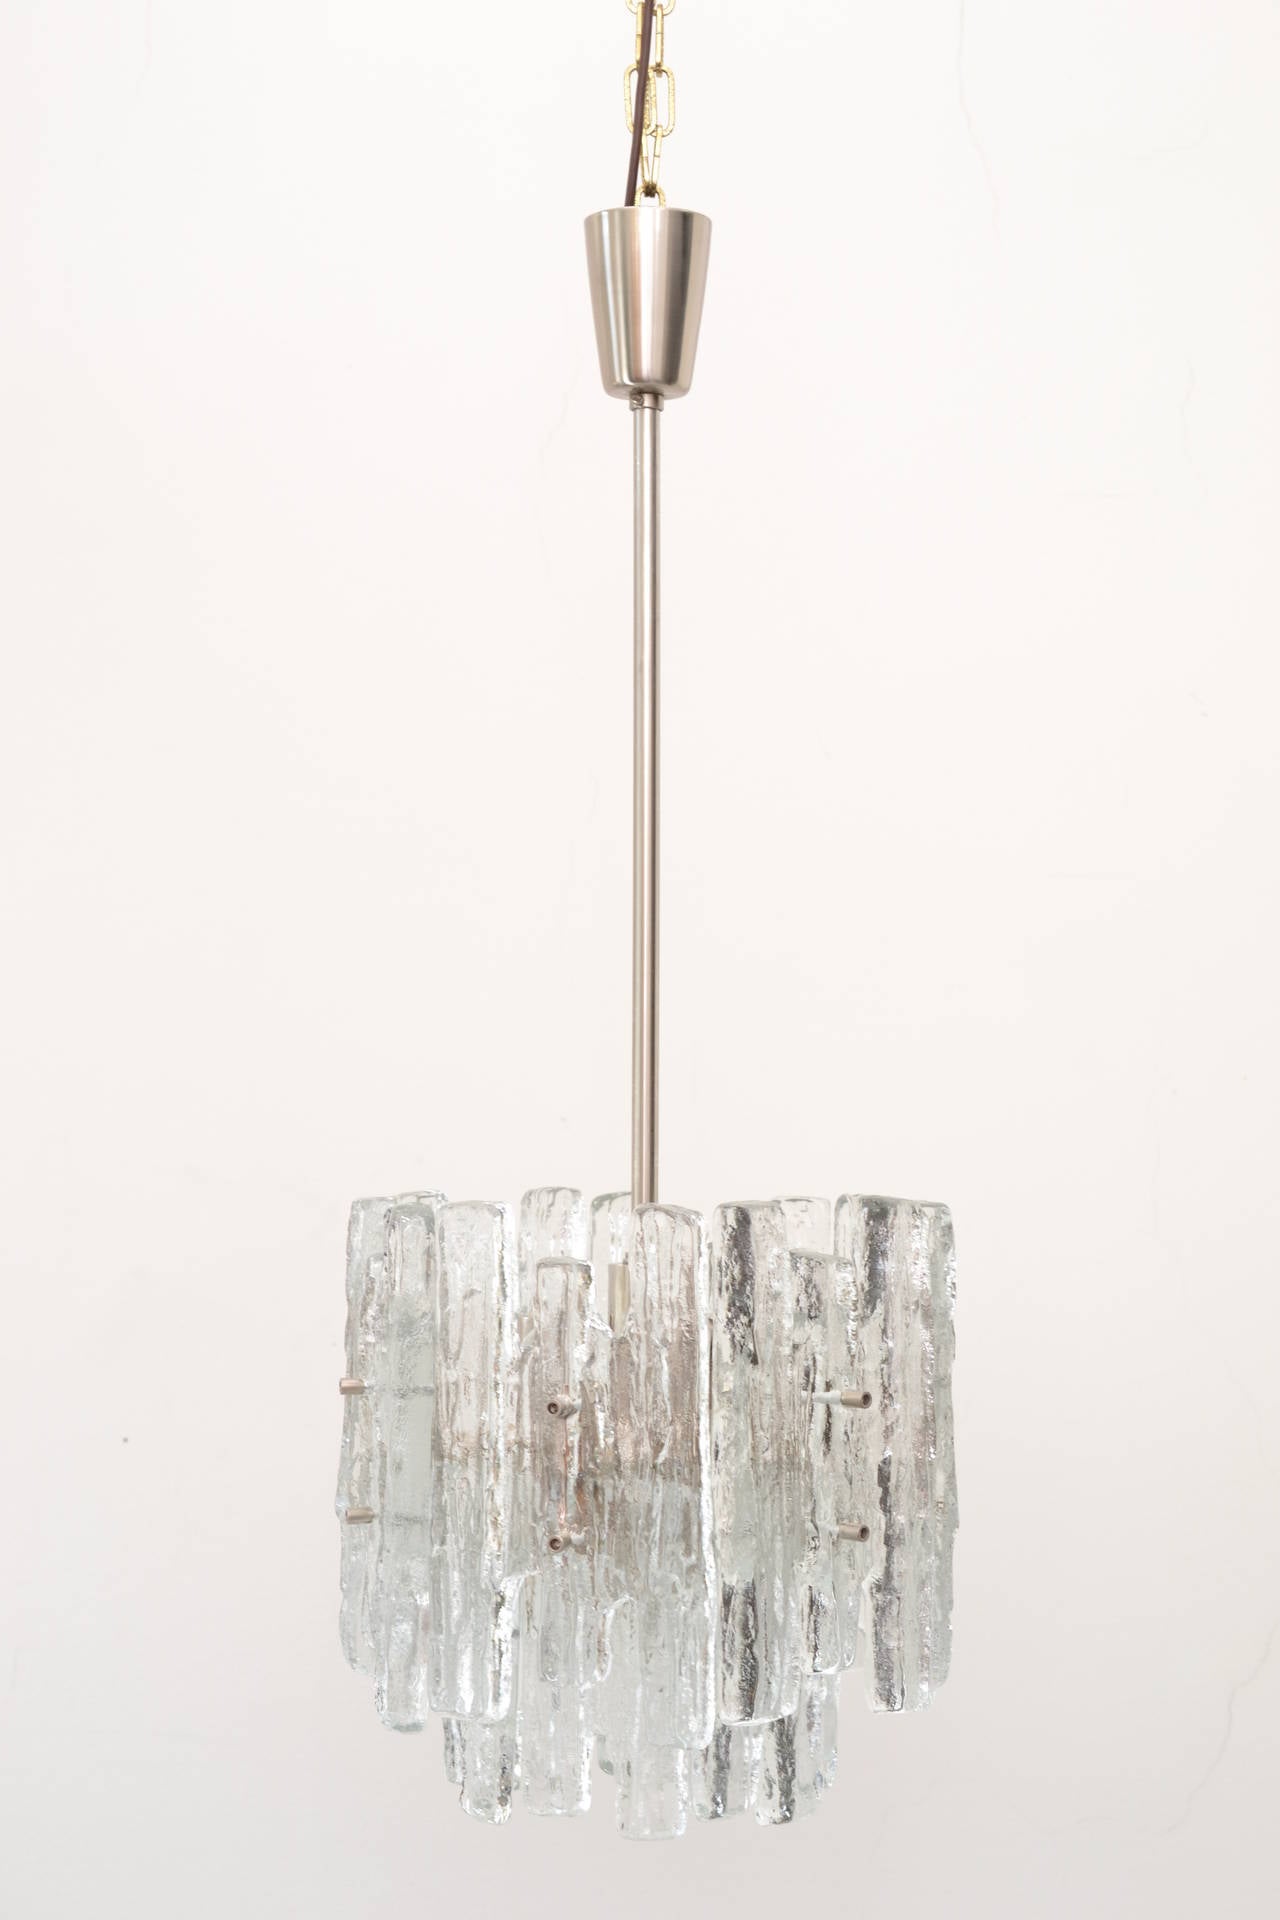 Massive two-Tiered Kalmar Ice Glass Chandelier
nickel platend